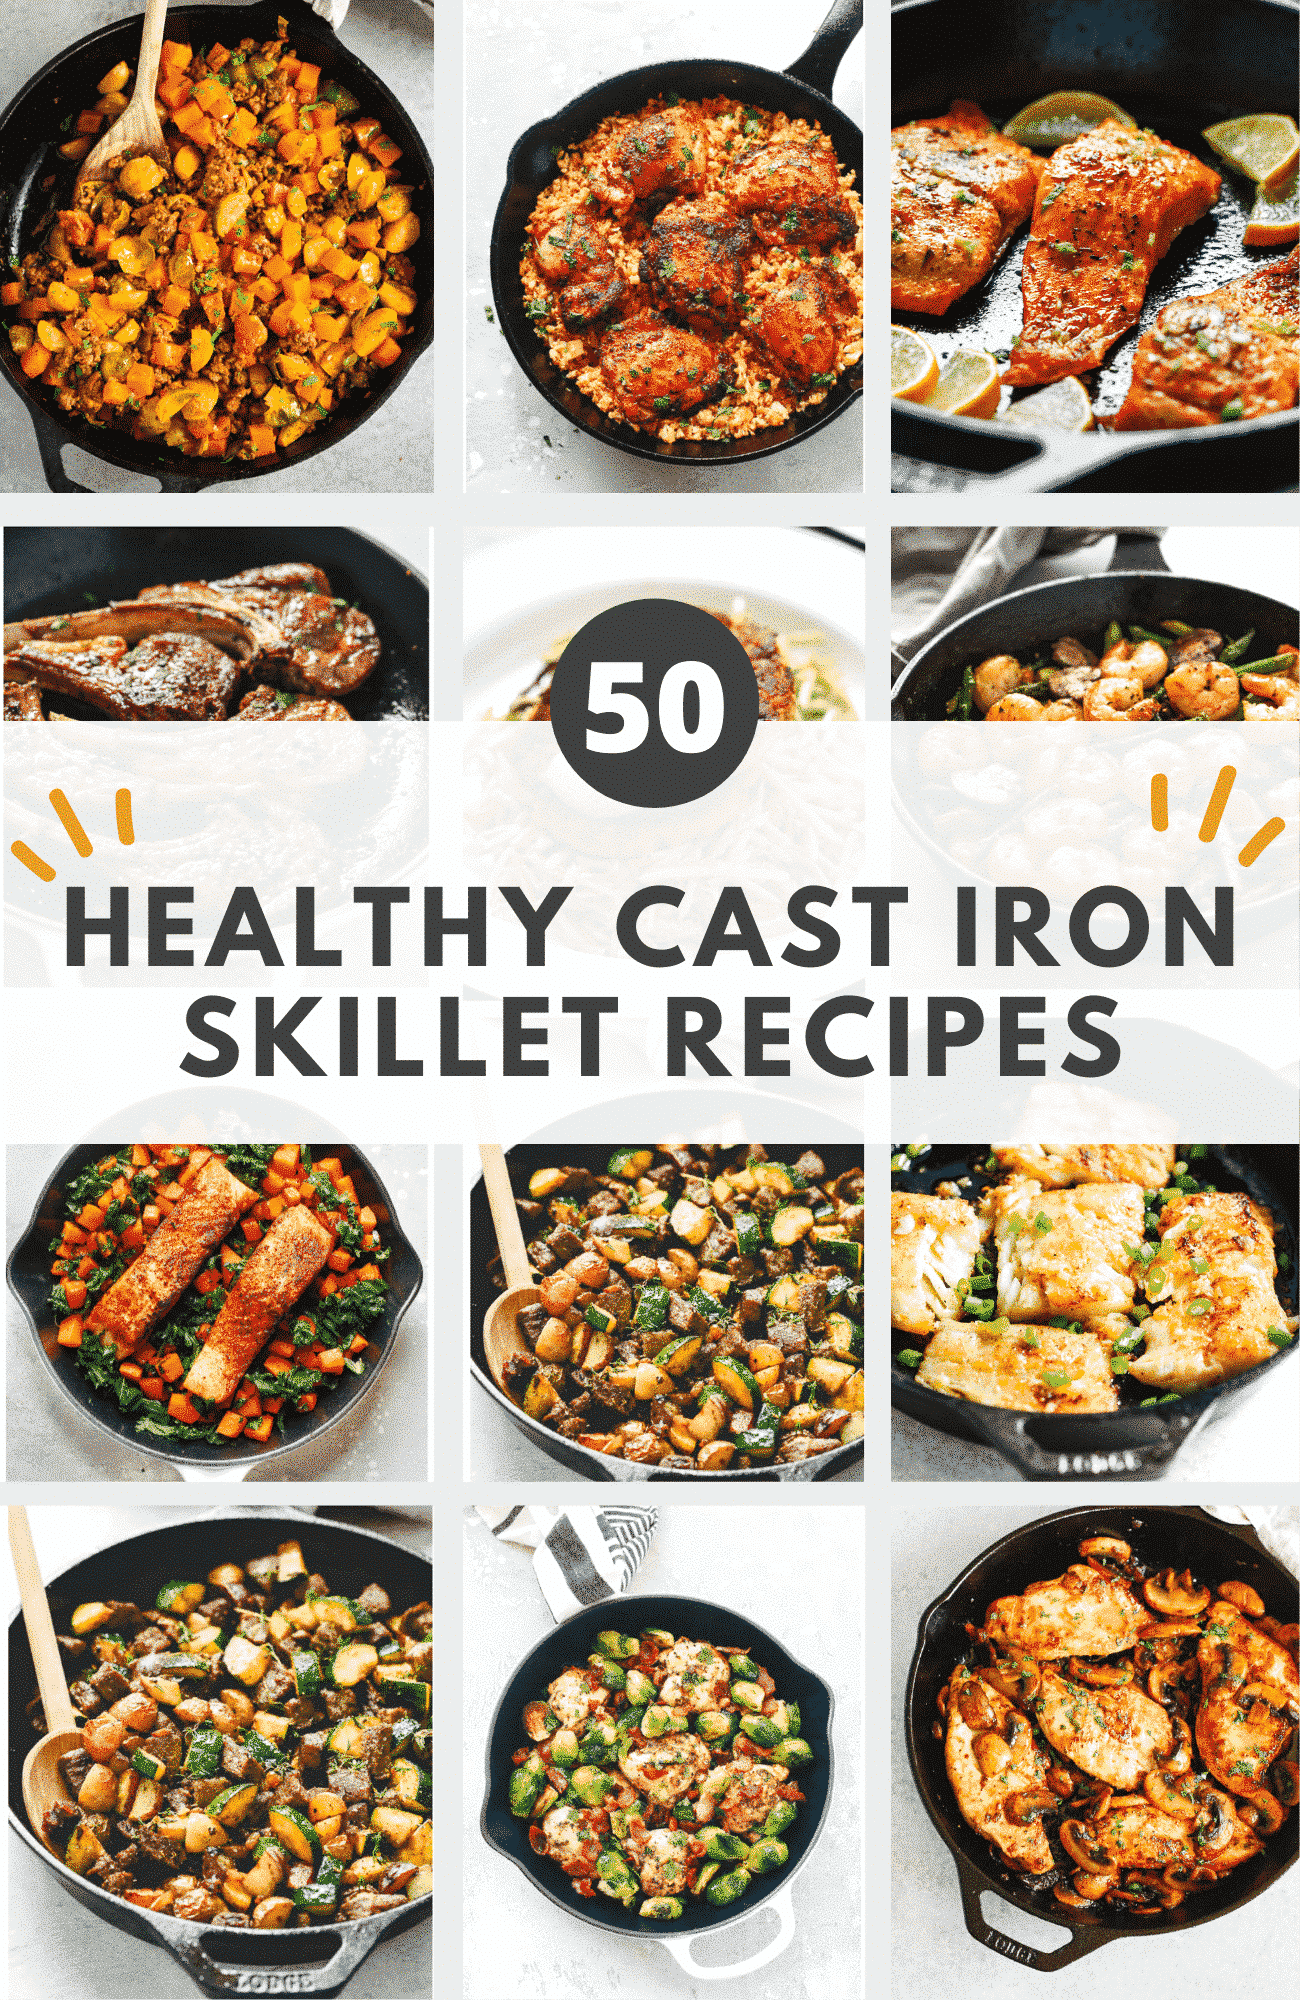 https://www.primaverakitchen.com/wp-content/uploads/2021/02/Healthy-Cast-Iron-Skillet-Recipes-2.png